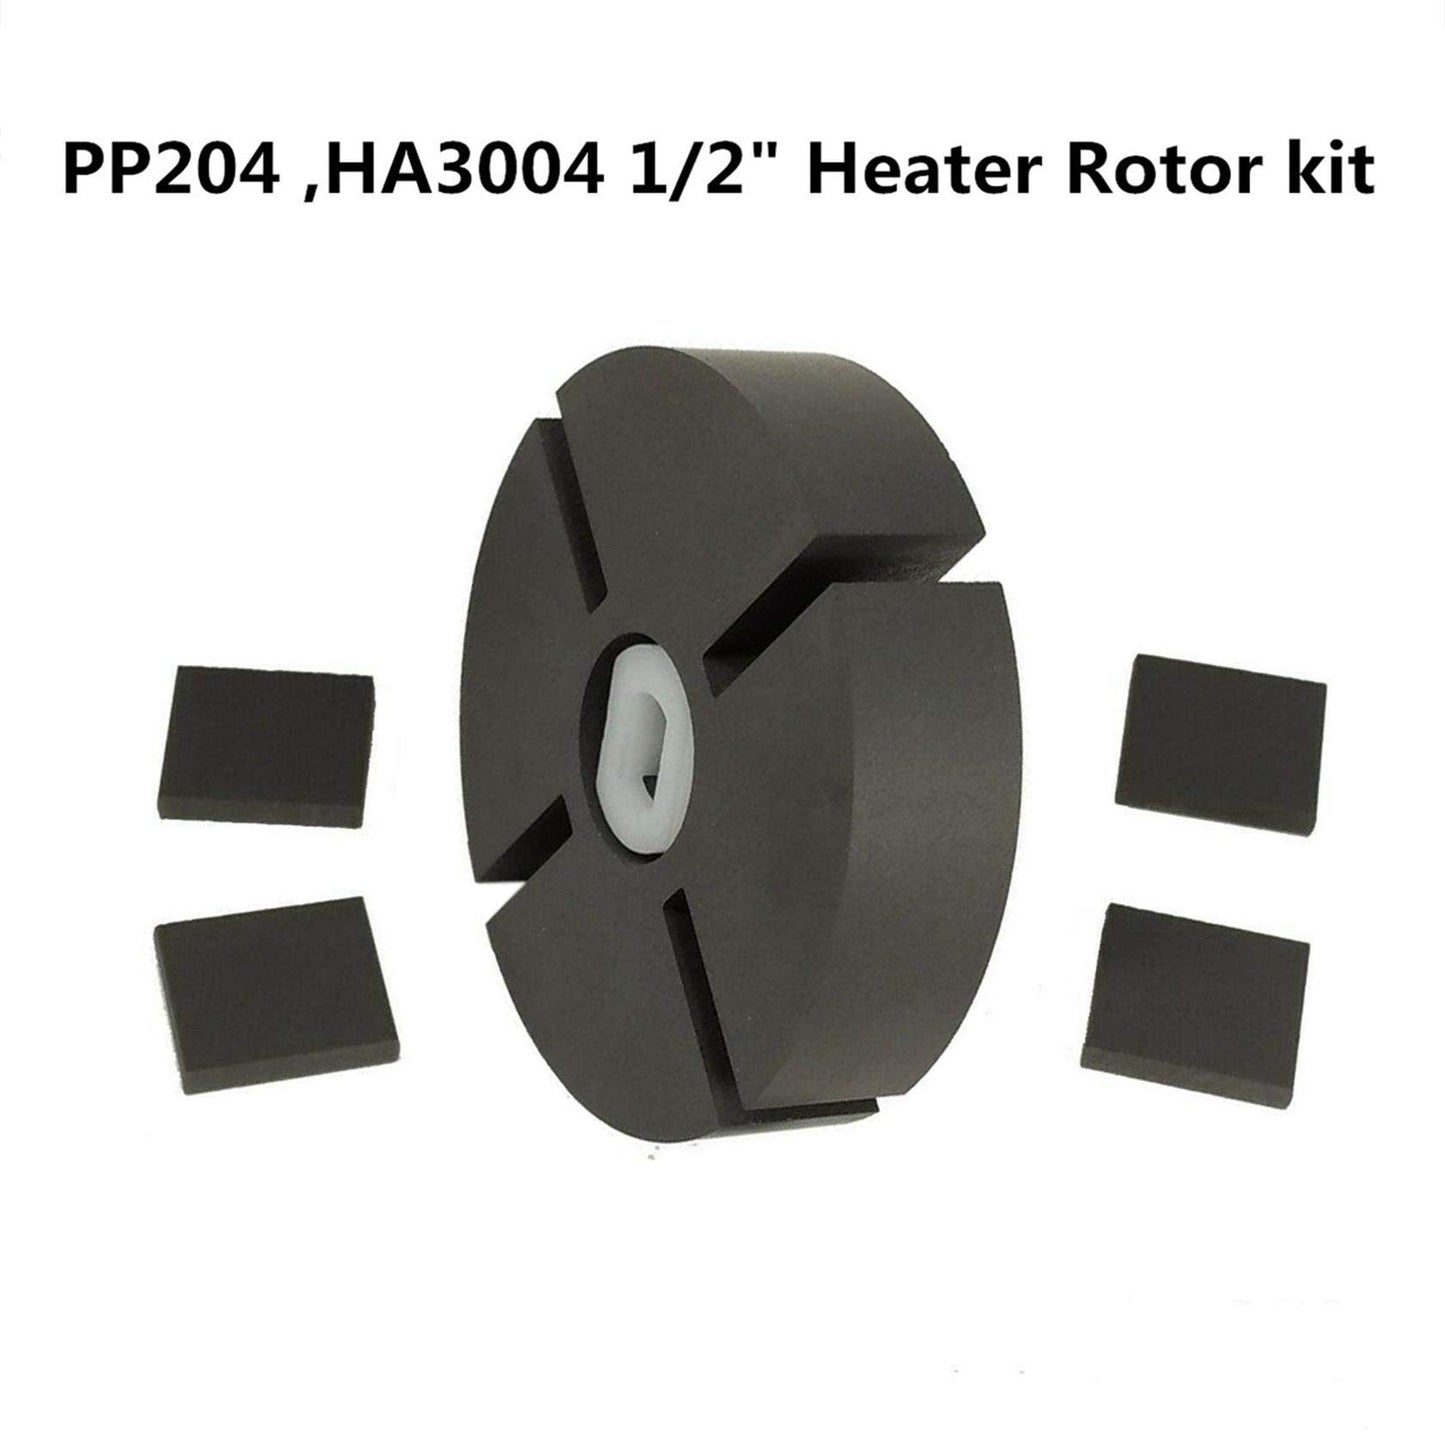 1/2" Ready Heater Rotor kit PP204 HA3004 for Desa, Reddy, Master Heater, Remington Heater